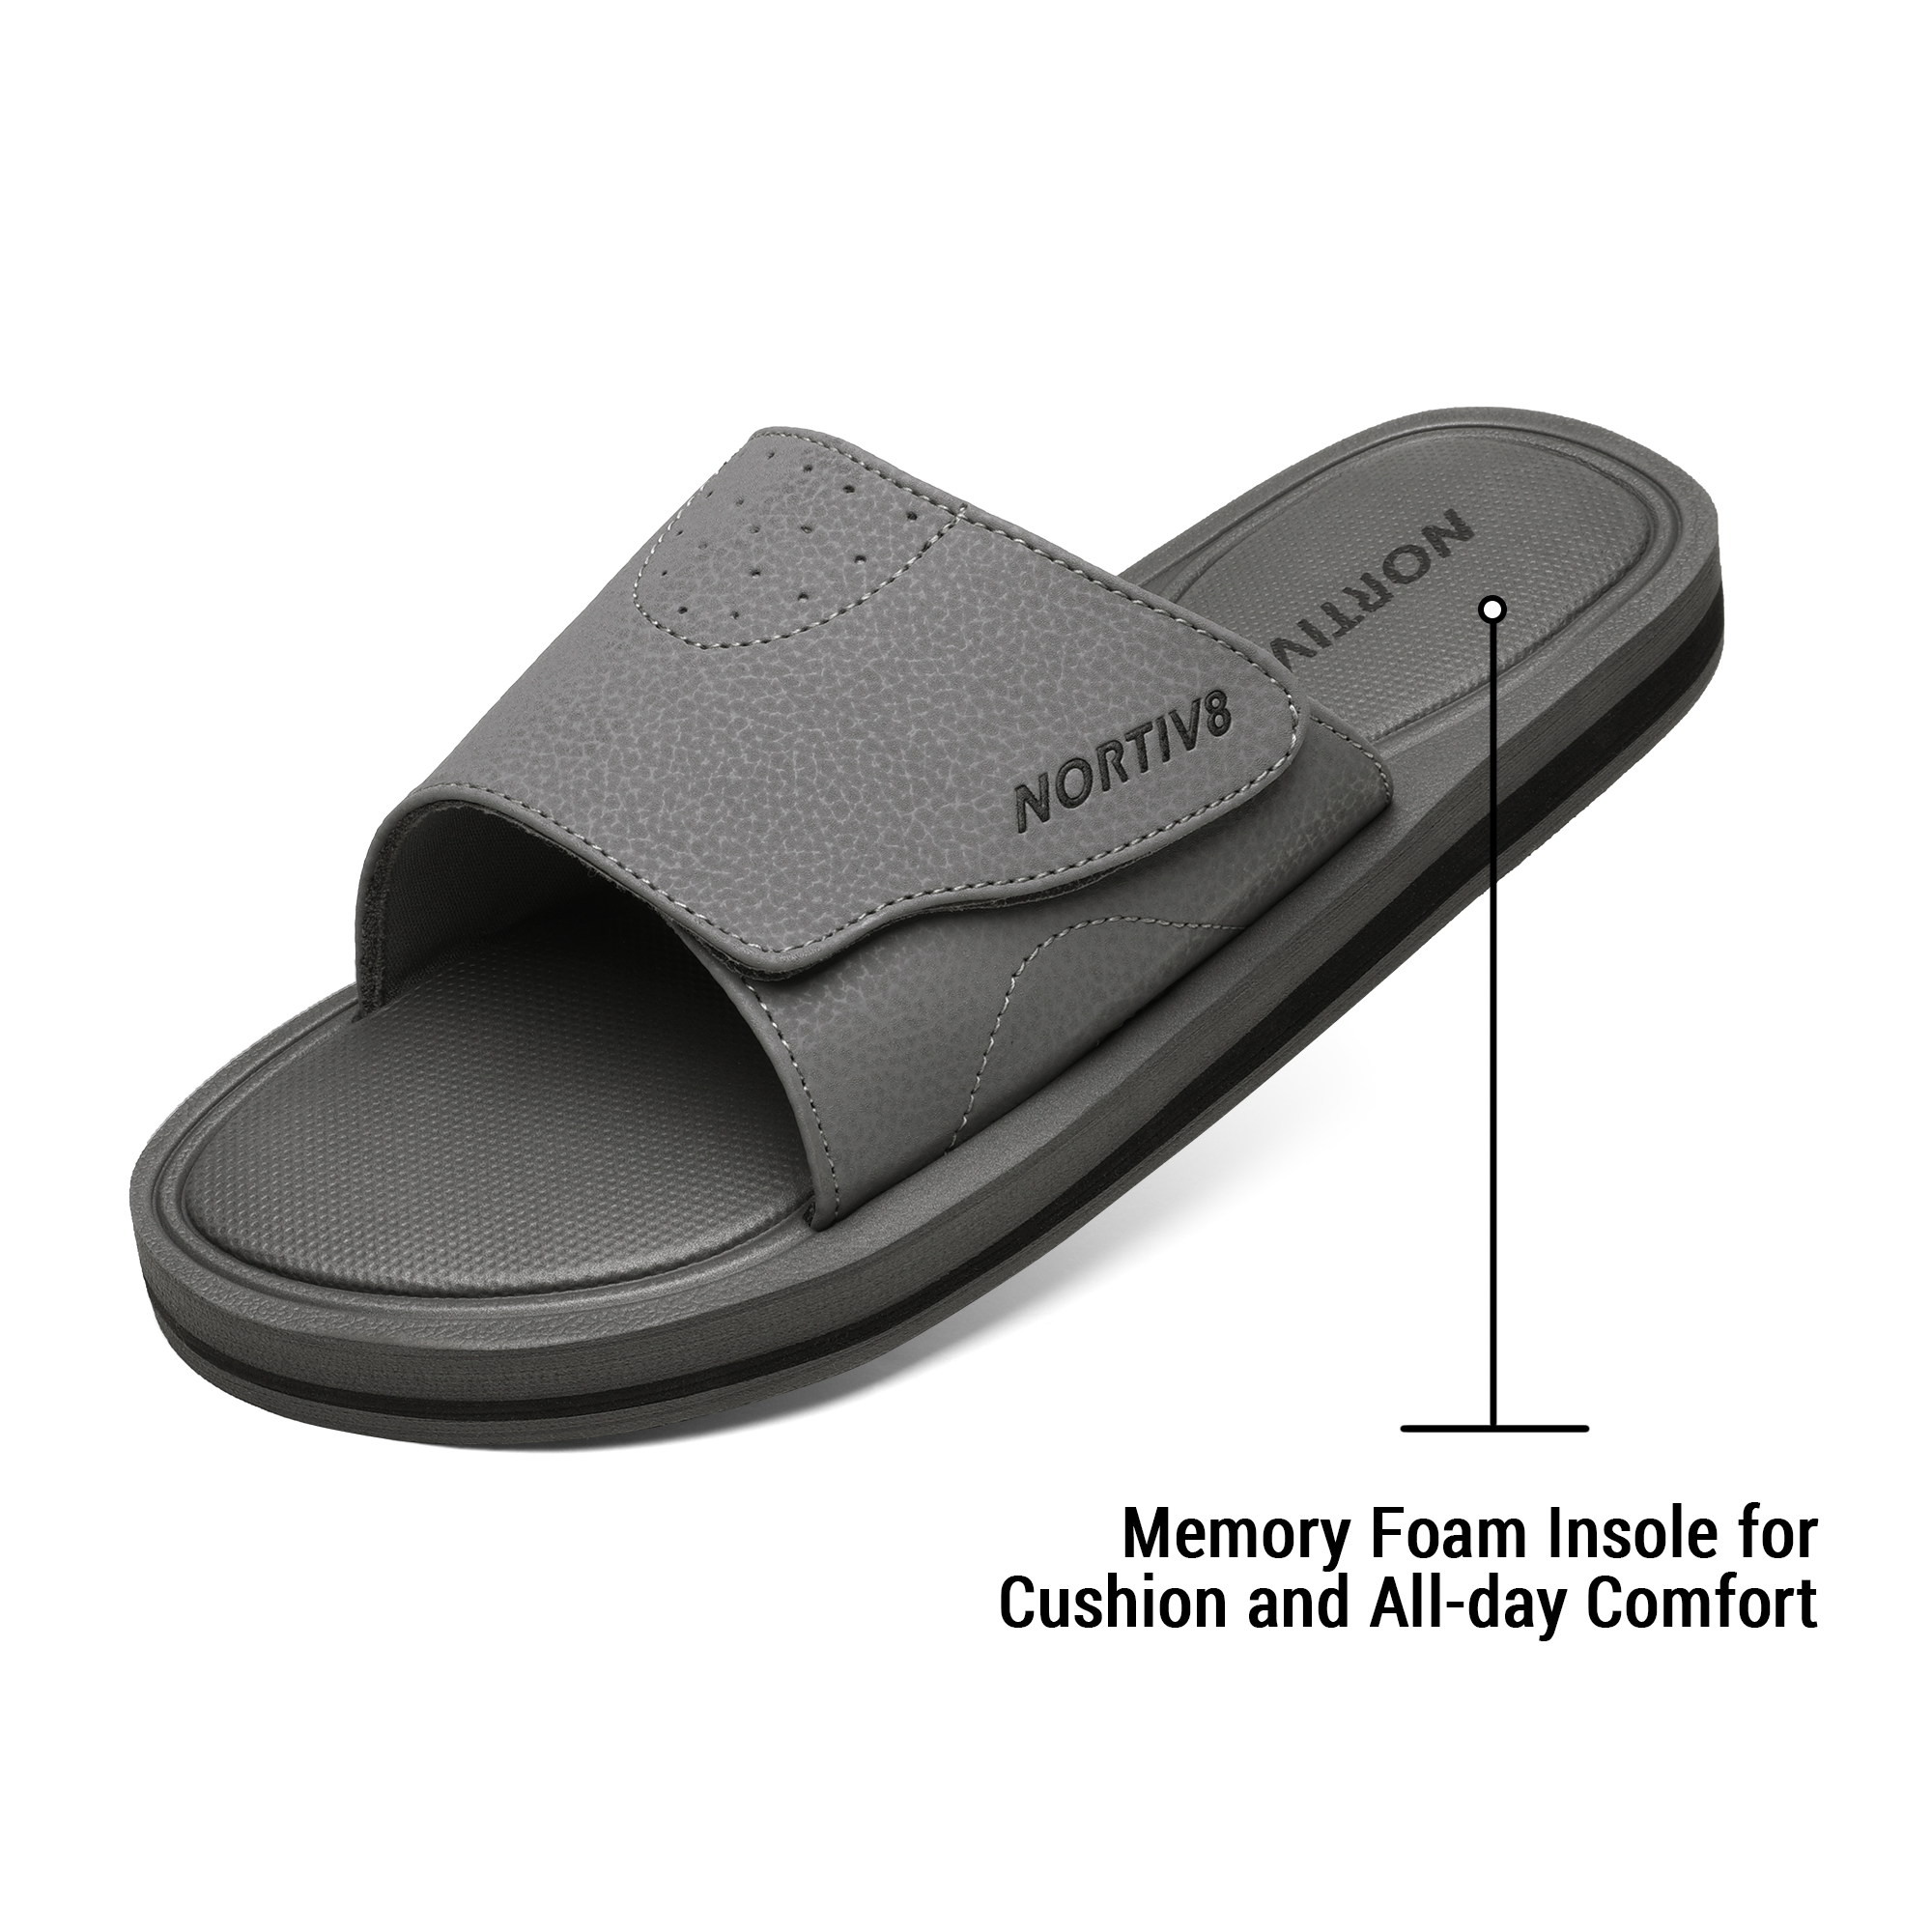 Nortiv8 Men's Memory Foam Adjustable Slide Sandals Comfort Lightweight Summer Beach Sandals Shoes FUSION GREY Size 12 - image 2 of 5